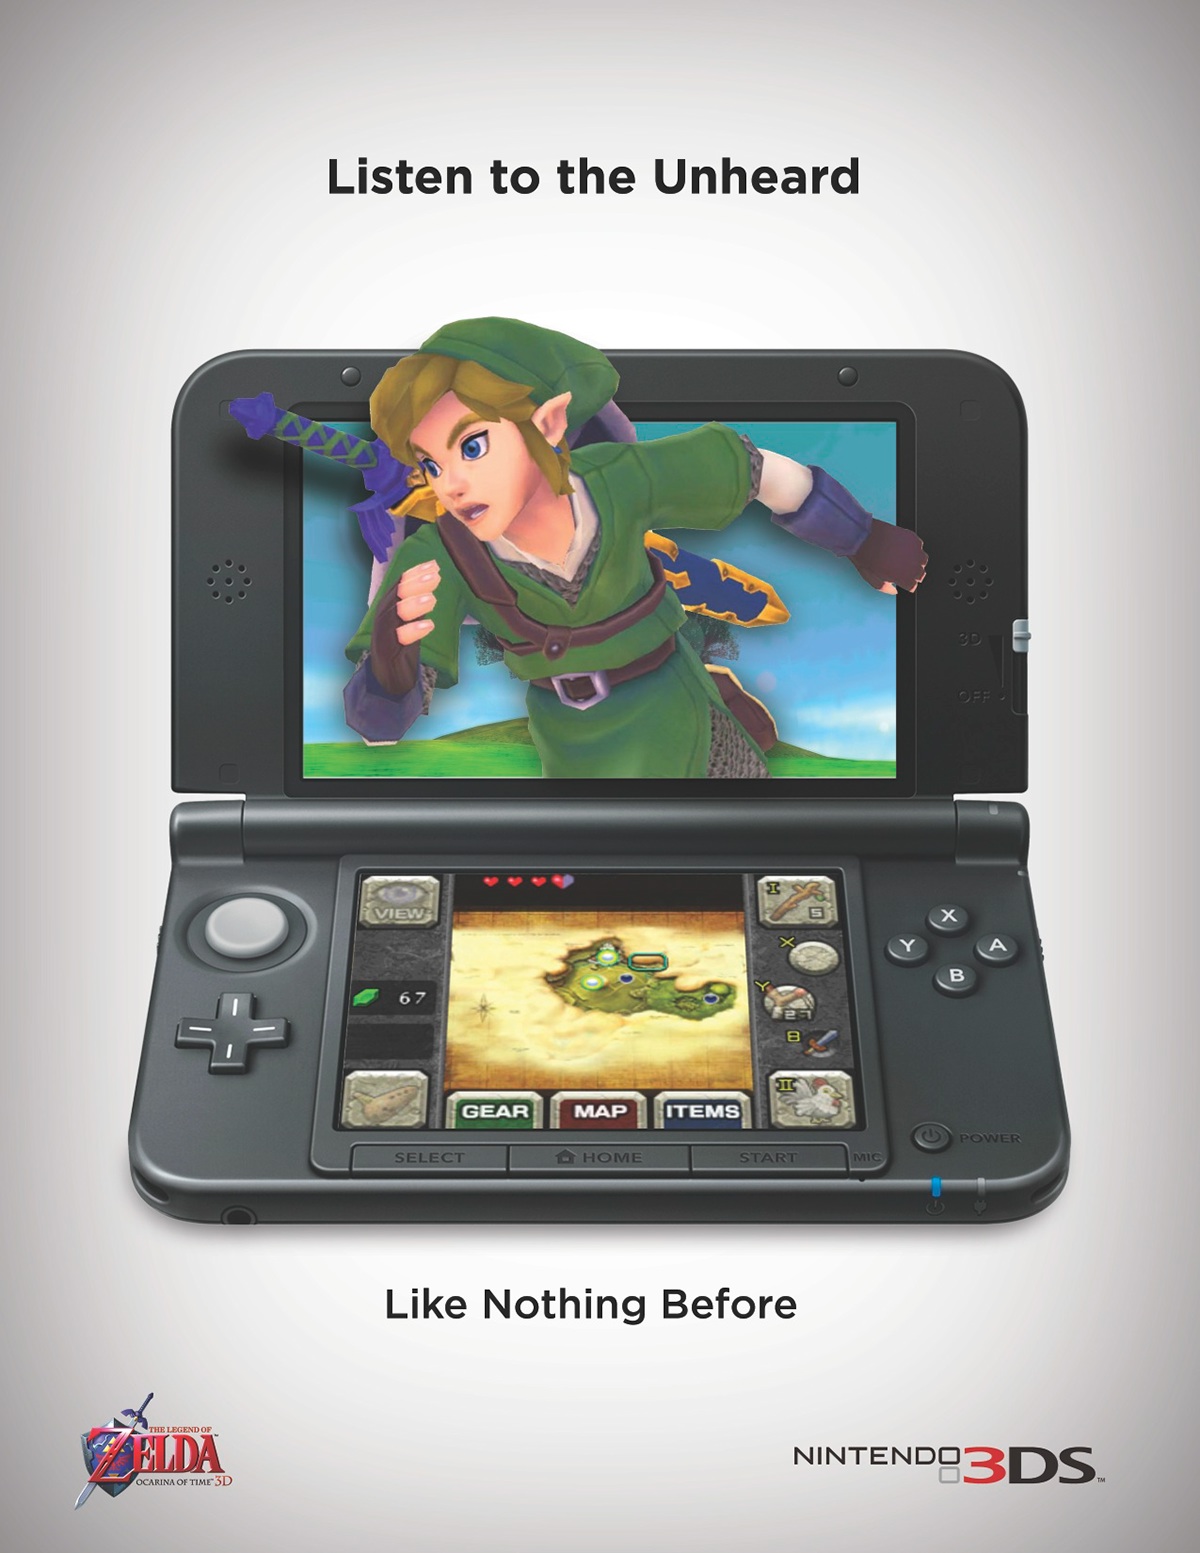 nintendo 3ds Like Nothing Seen Nothing Seen Before Nintendo mario